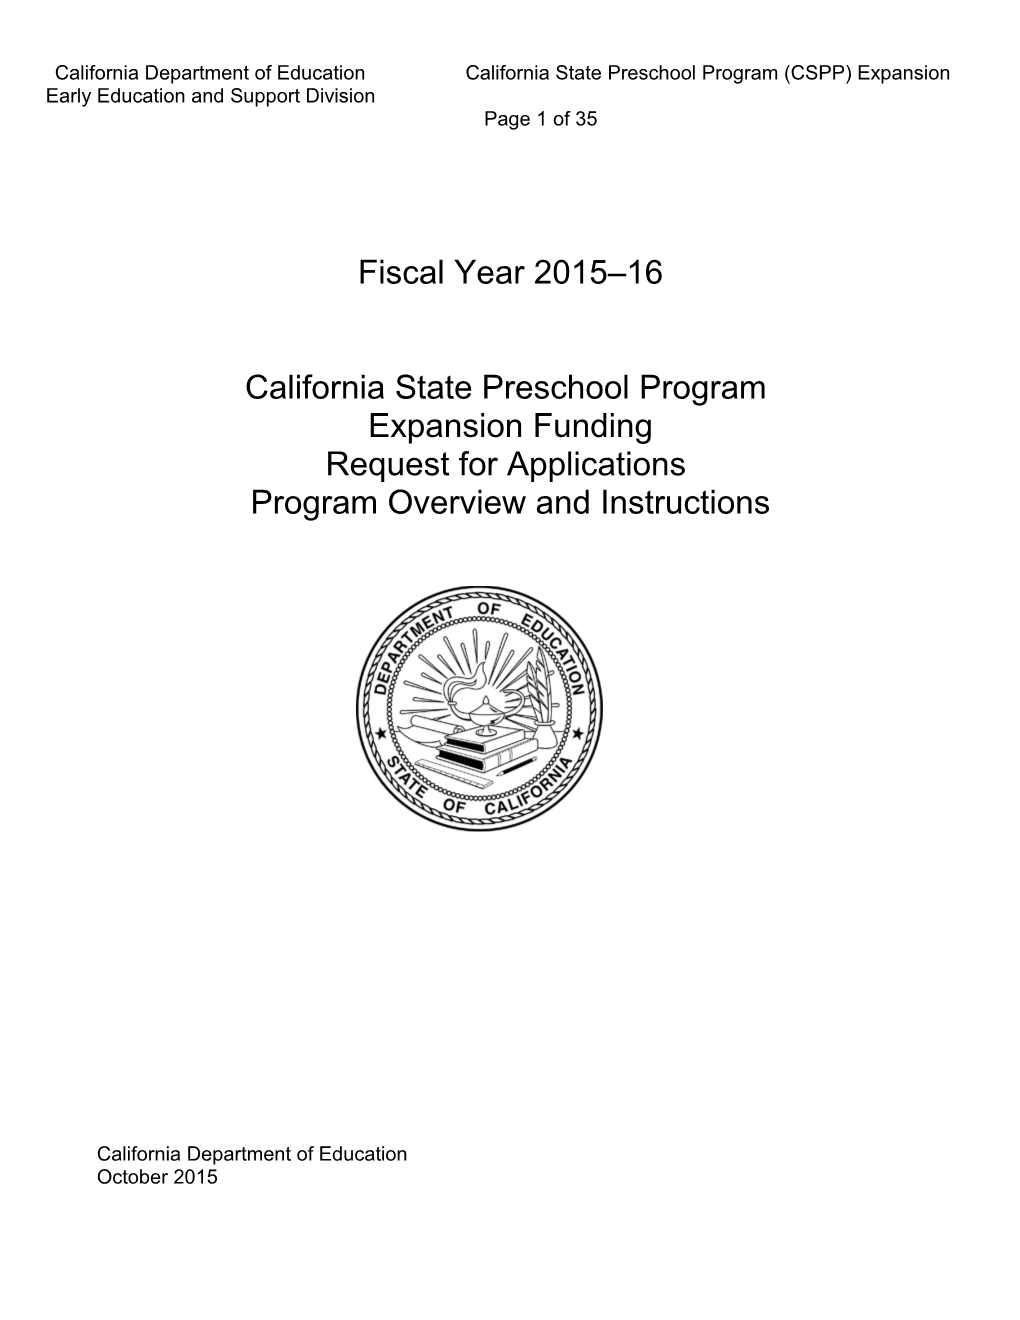 CSPP Expansion RFA 2015-16 - Child Development (CA Dept of Education)